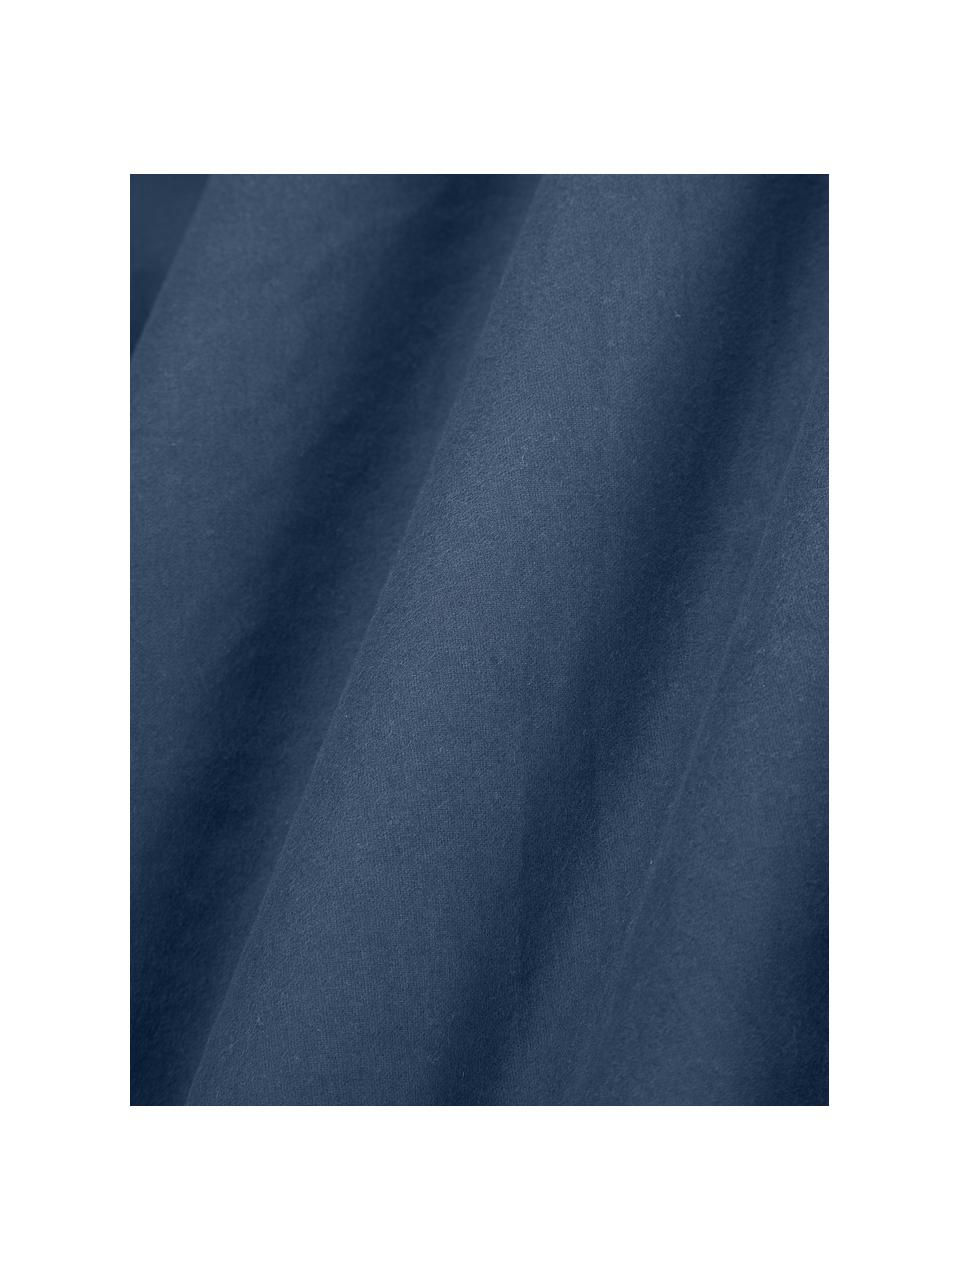 Boxspring-Spannbettlaken Biba aus Flanell in Marinenblau, Webart: Flanell Flanell ist ein k, Marinenblau, B 90 x L 200 cm